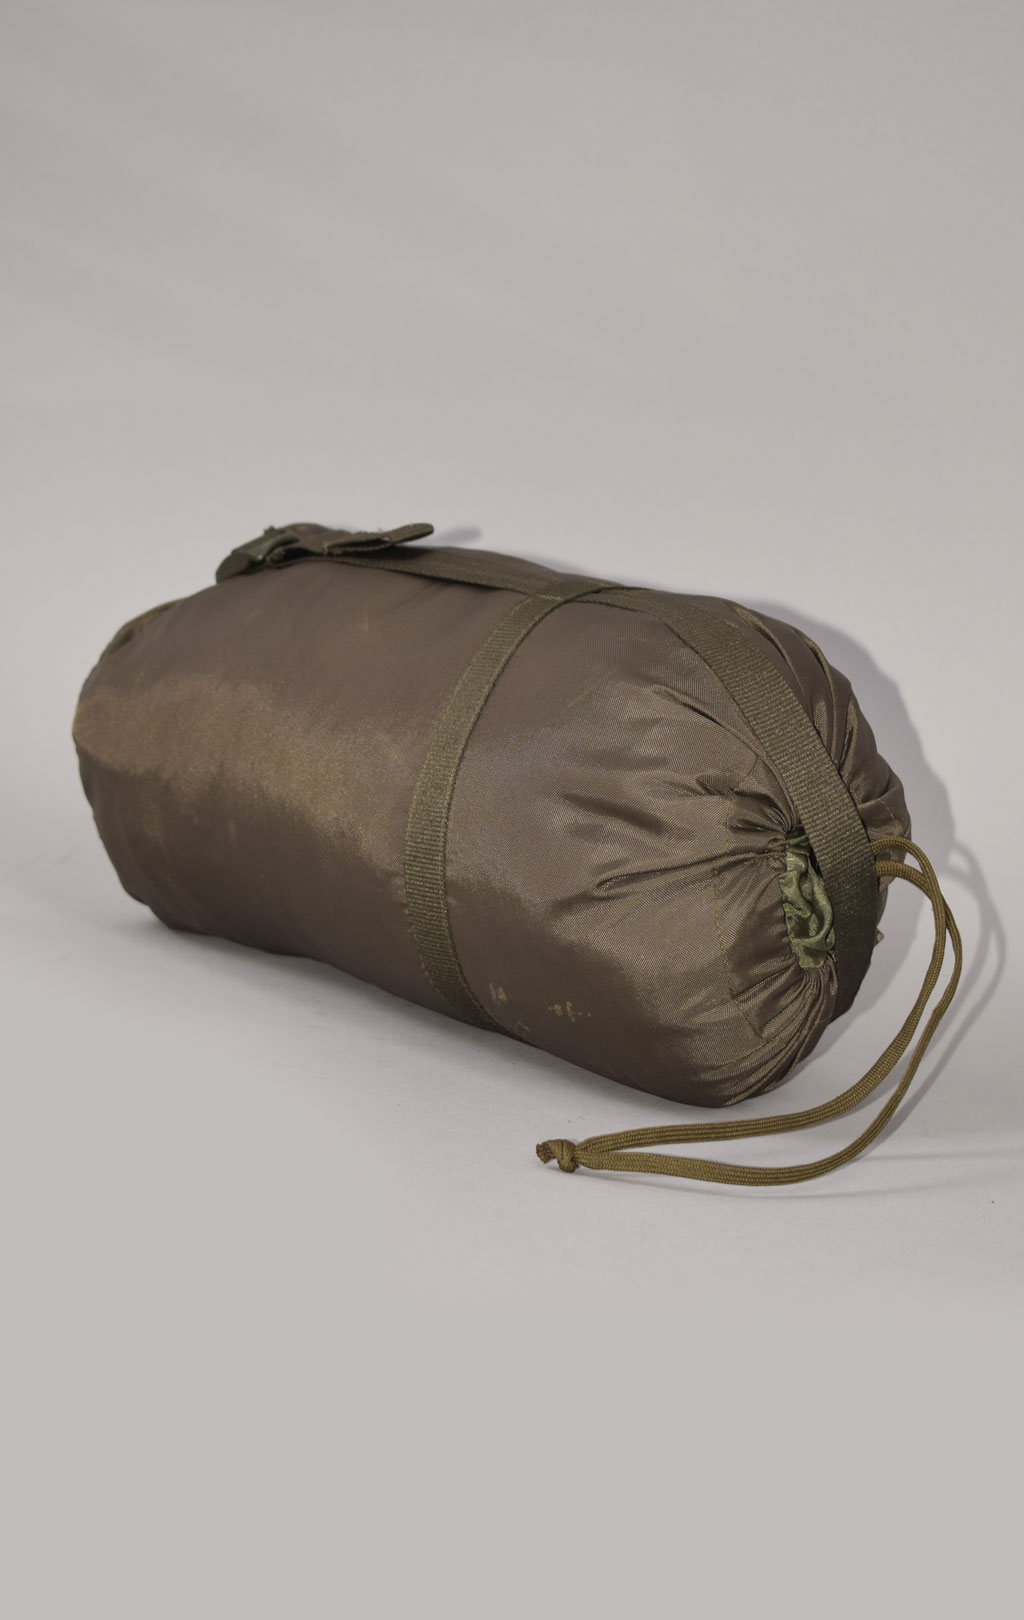 Спальный мешок RANGER PRO Force olive б/у Англия